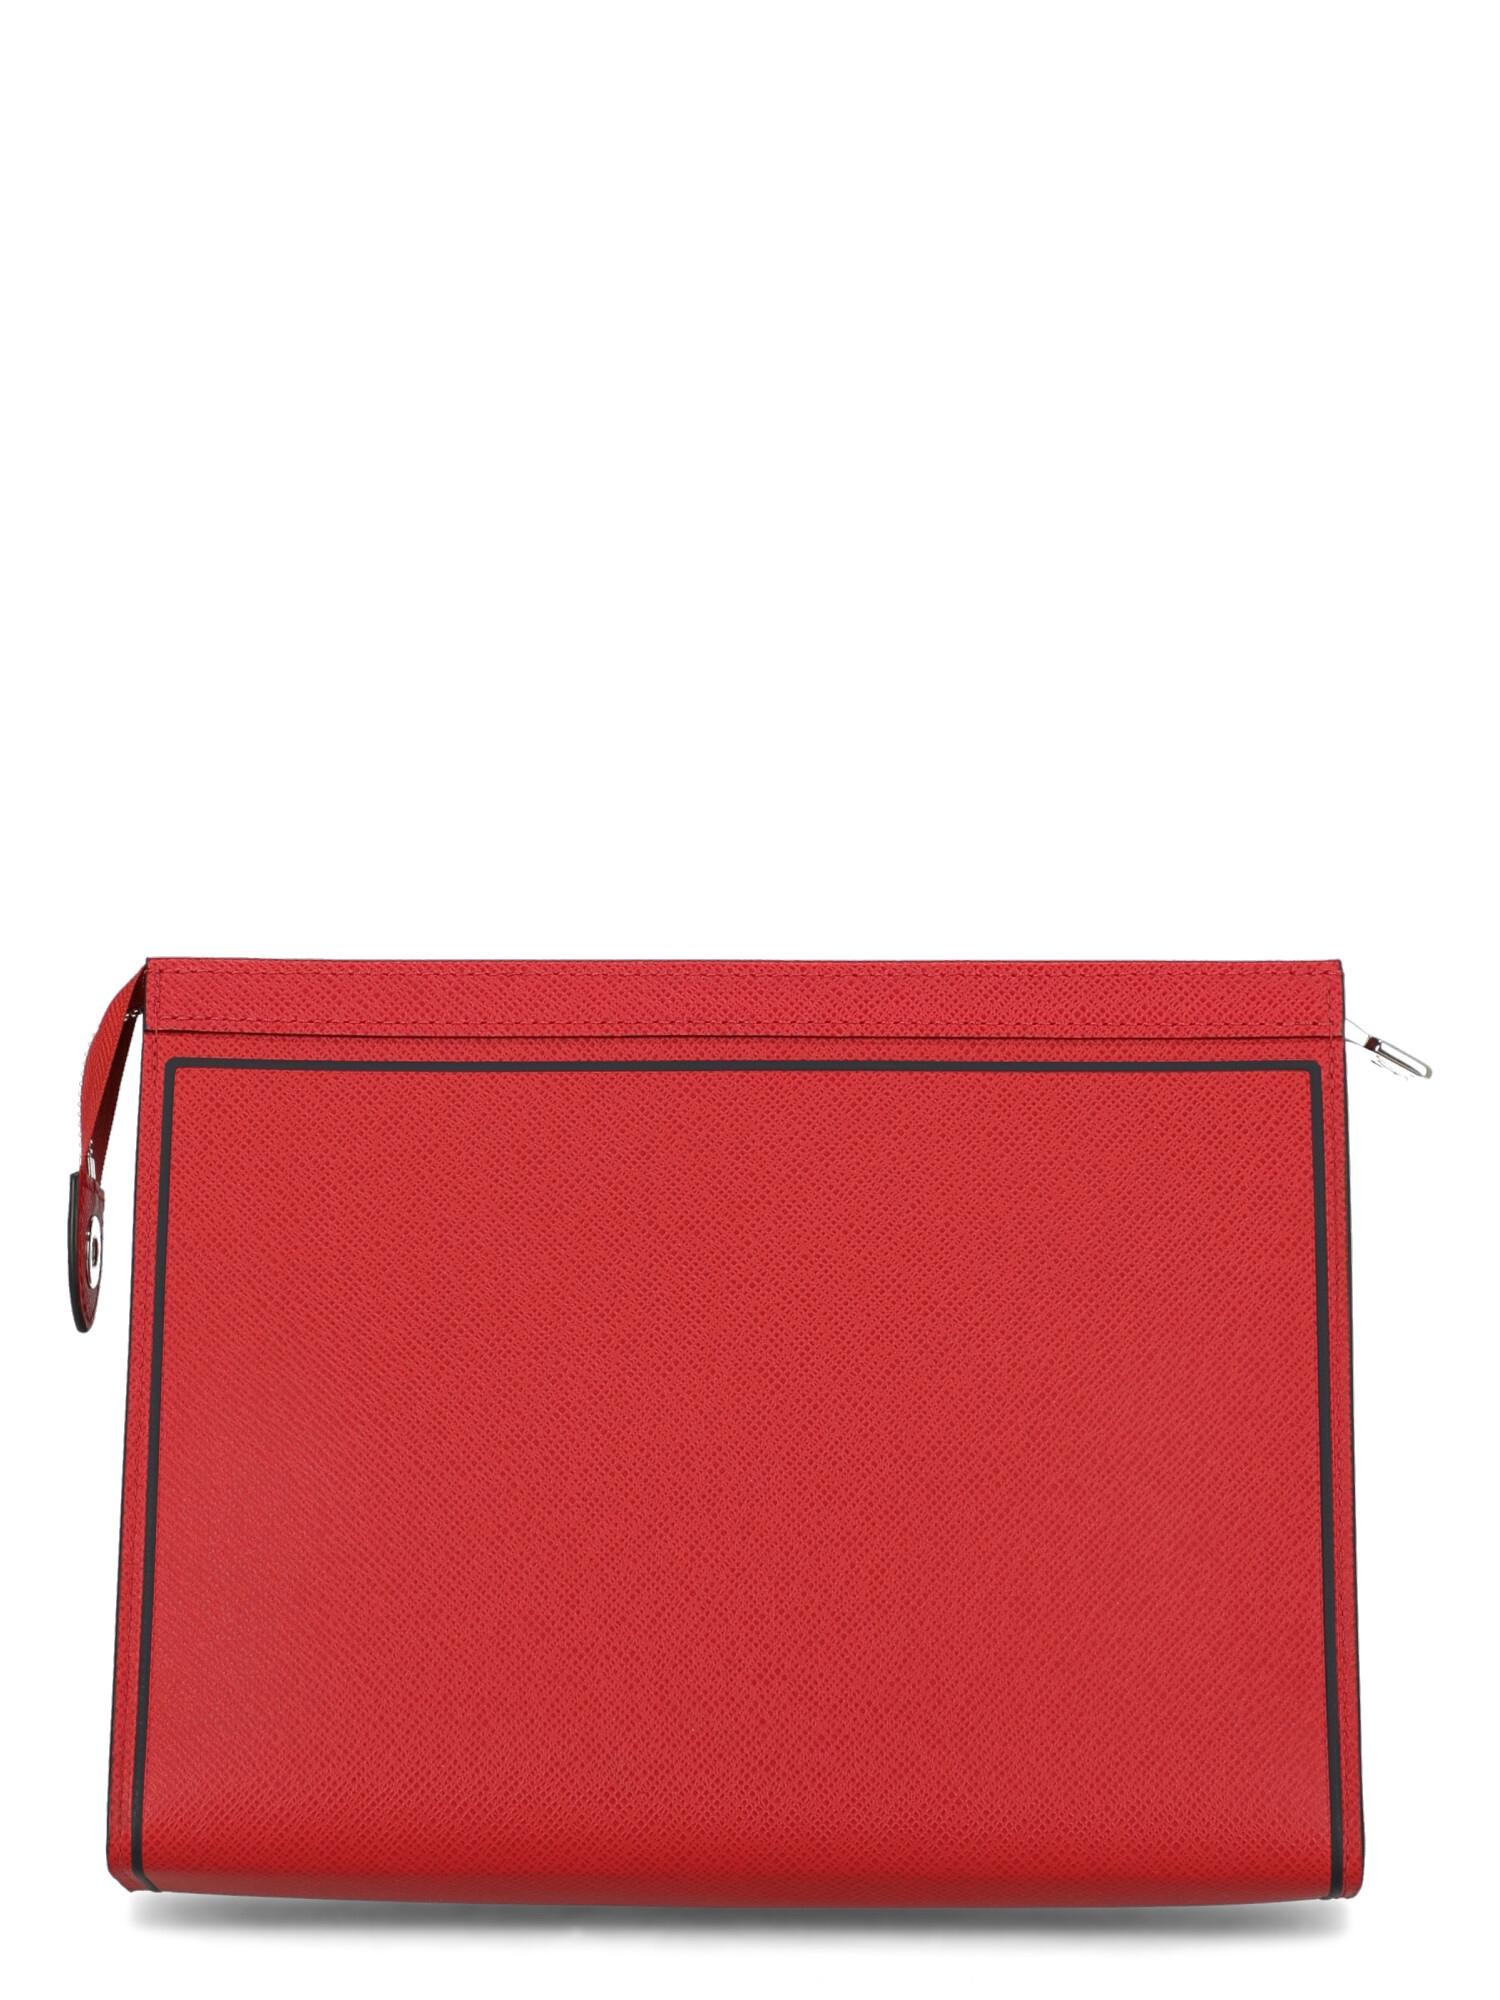 Women's Louis Vuitton Woman Handbag  Red Leather